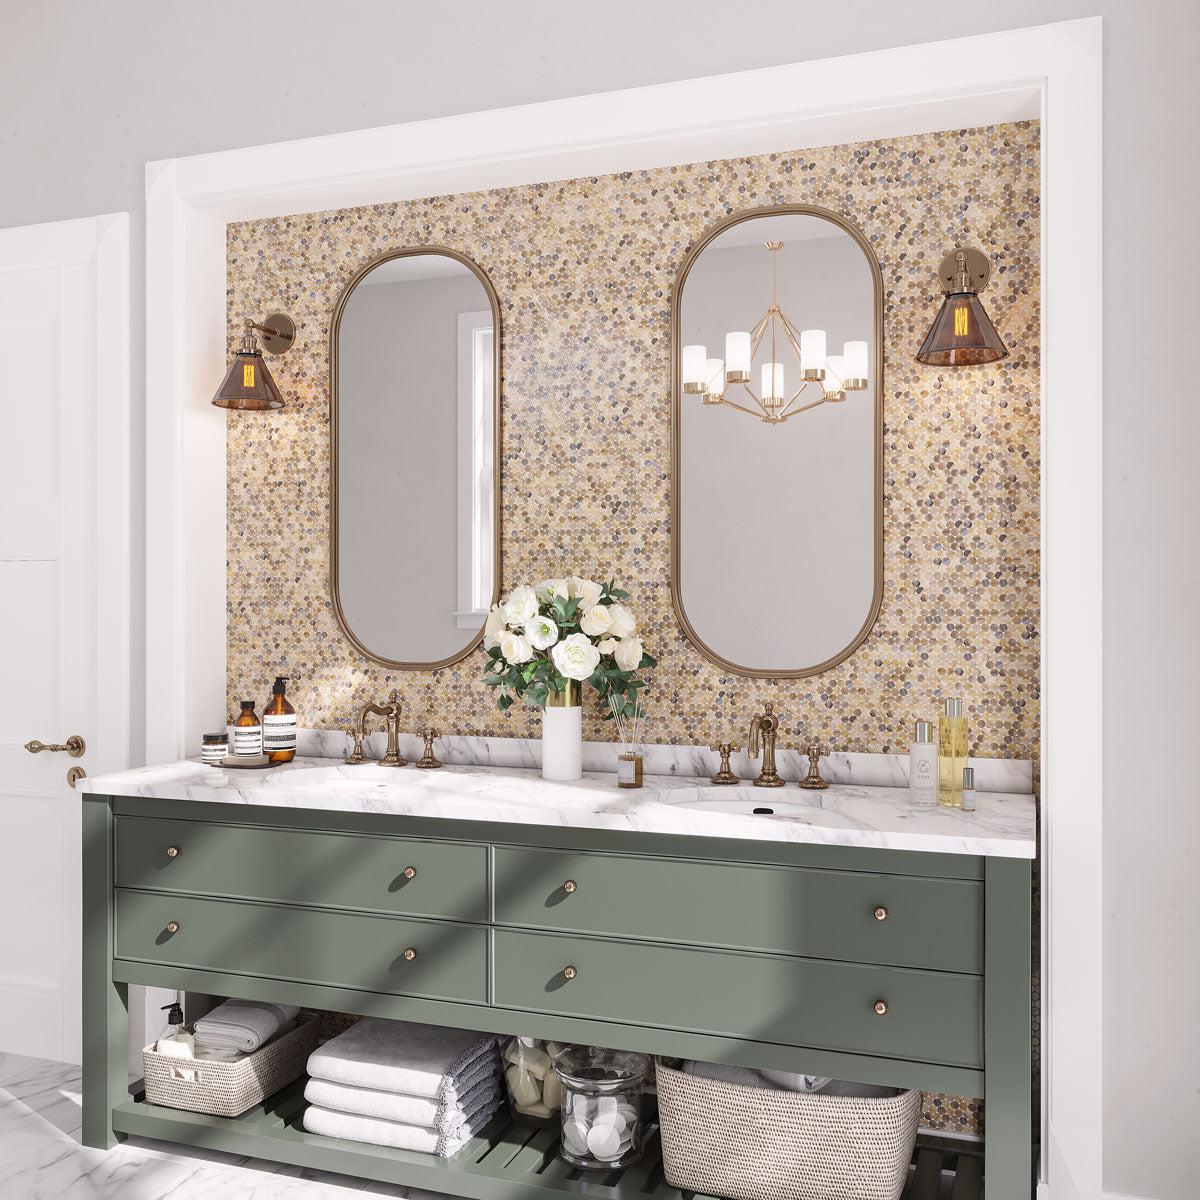 Neutral bathroom with glass penny tile backsplash and sage green vanity cabinets